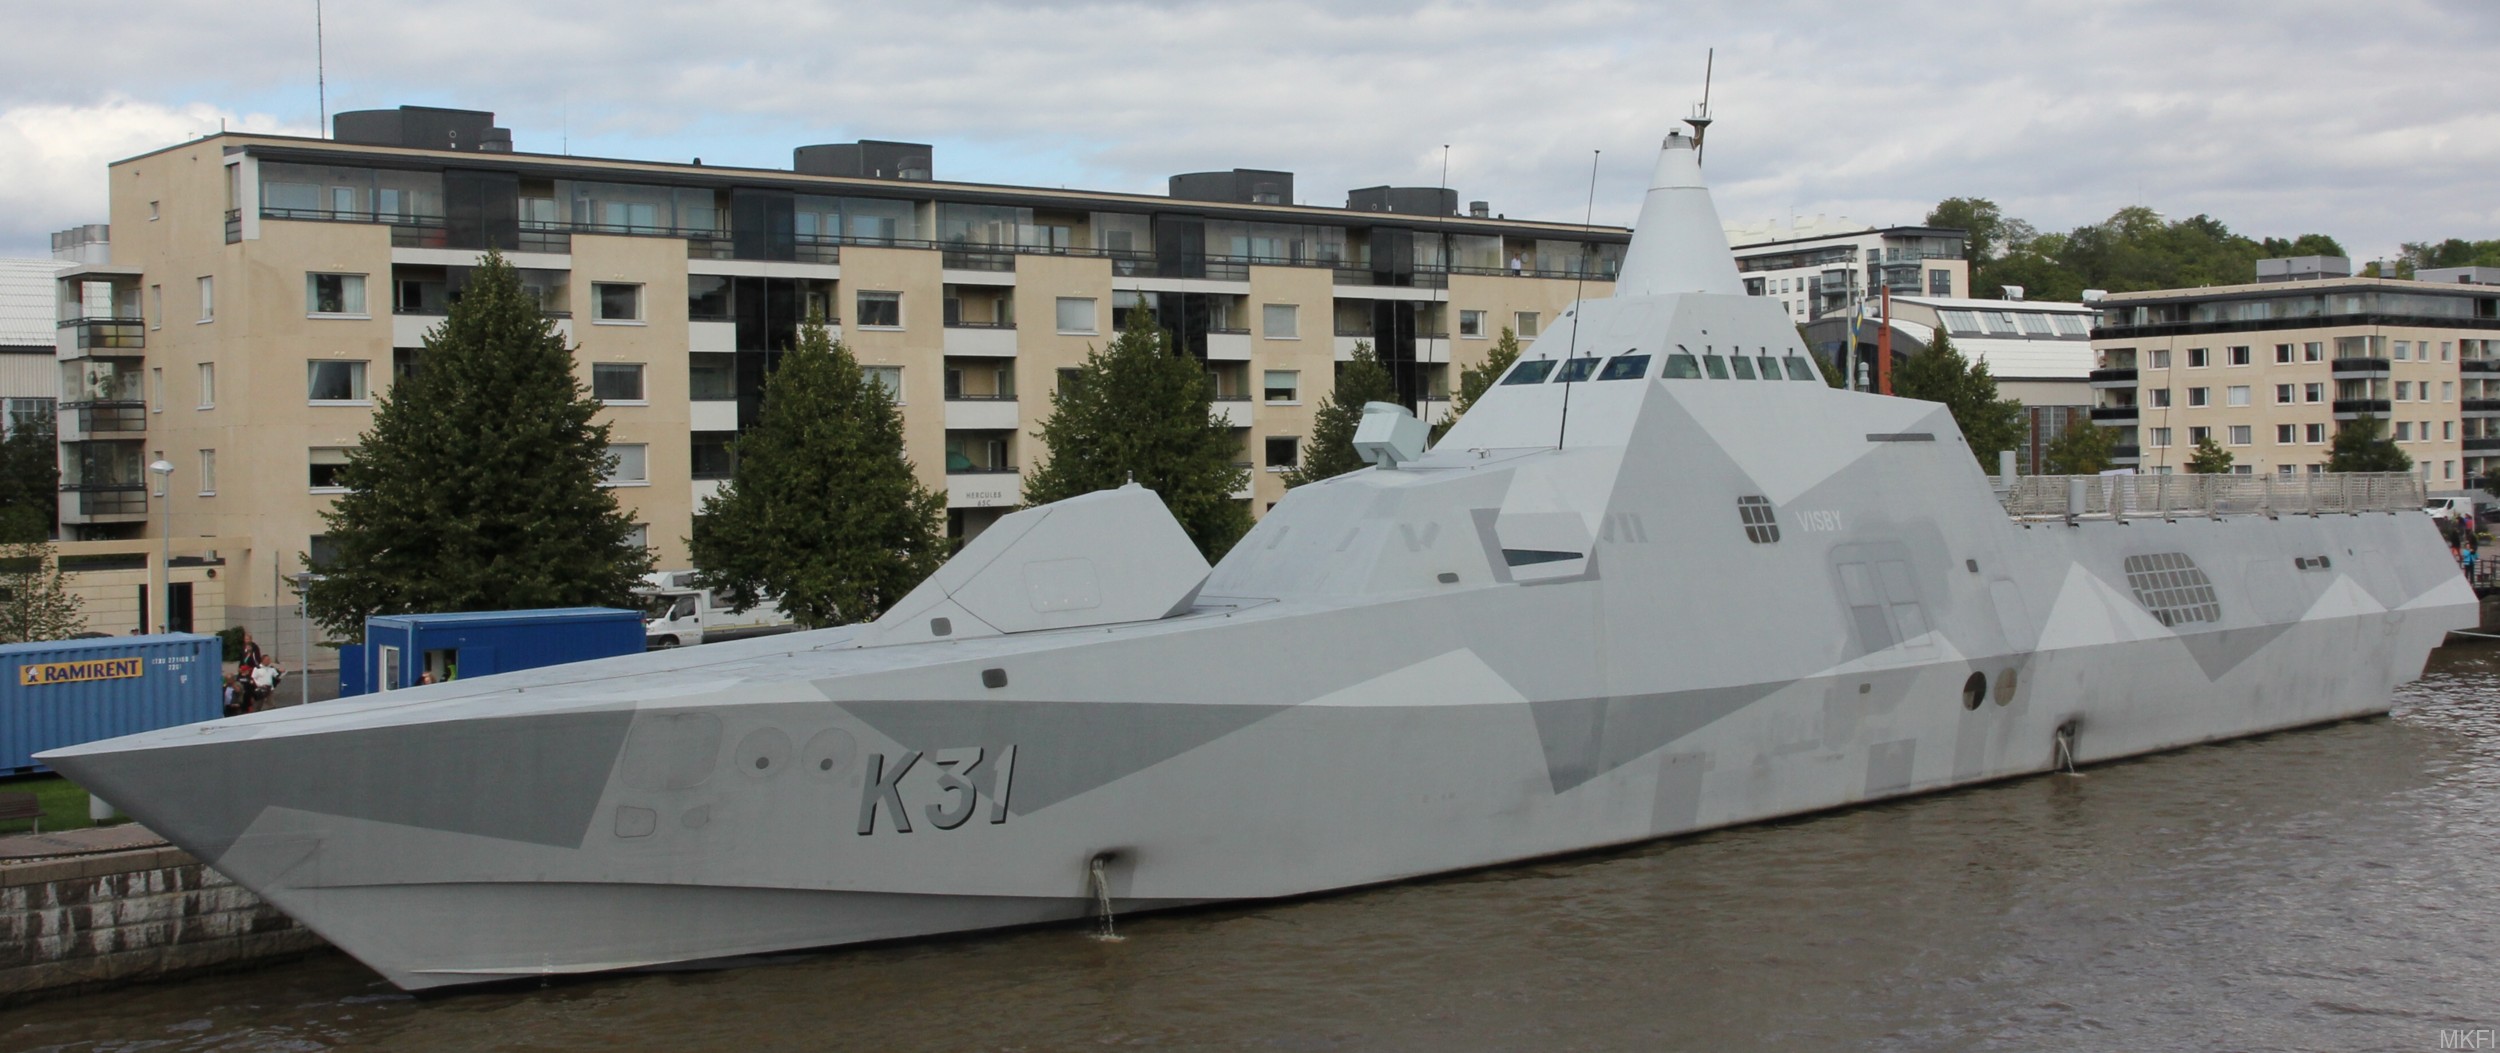 k31 hswms hms visby class corvette royal swedish navy svenska marinen 05